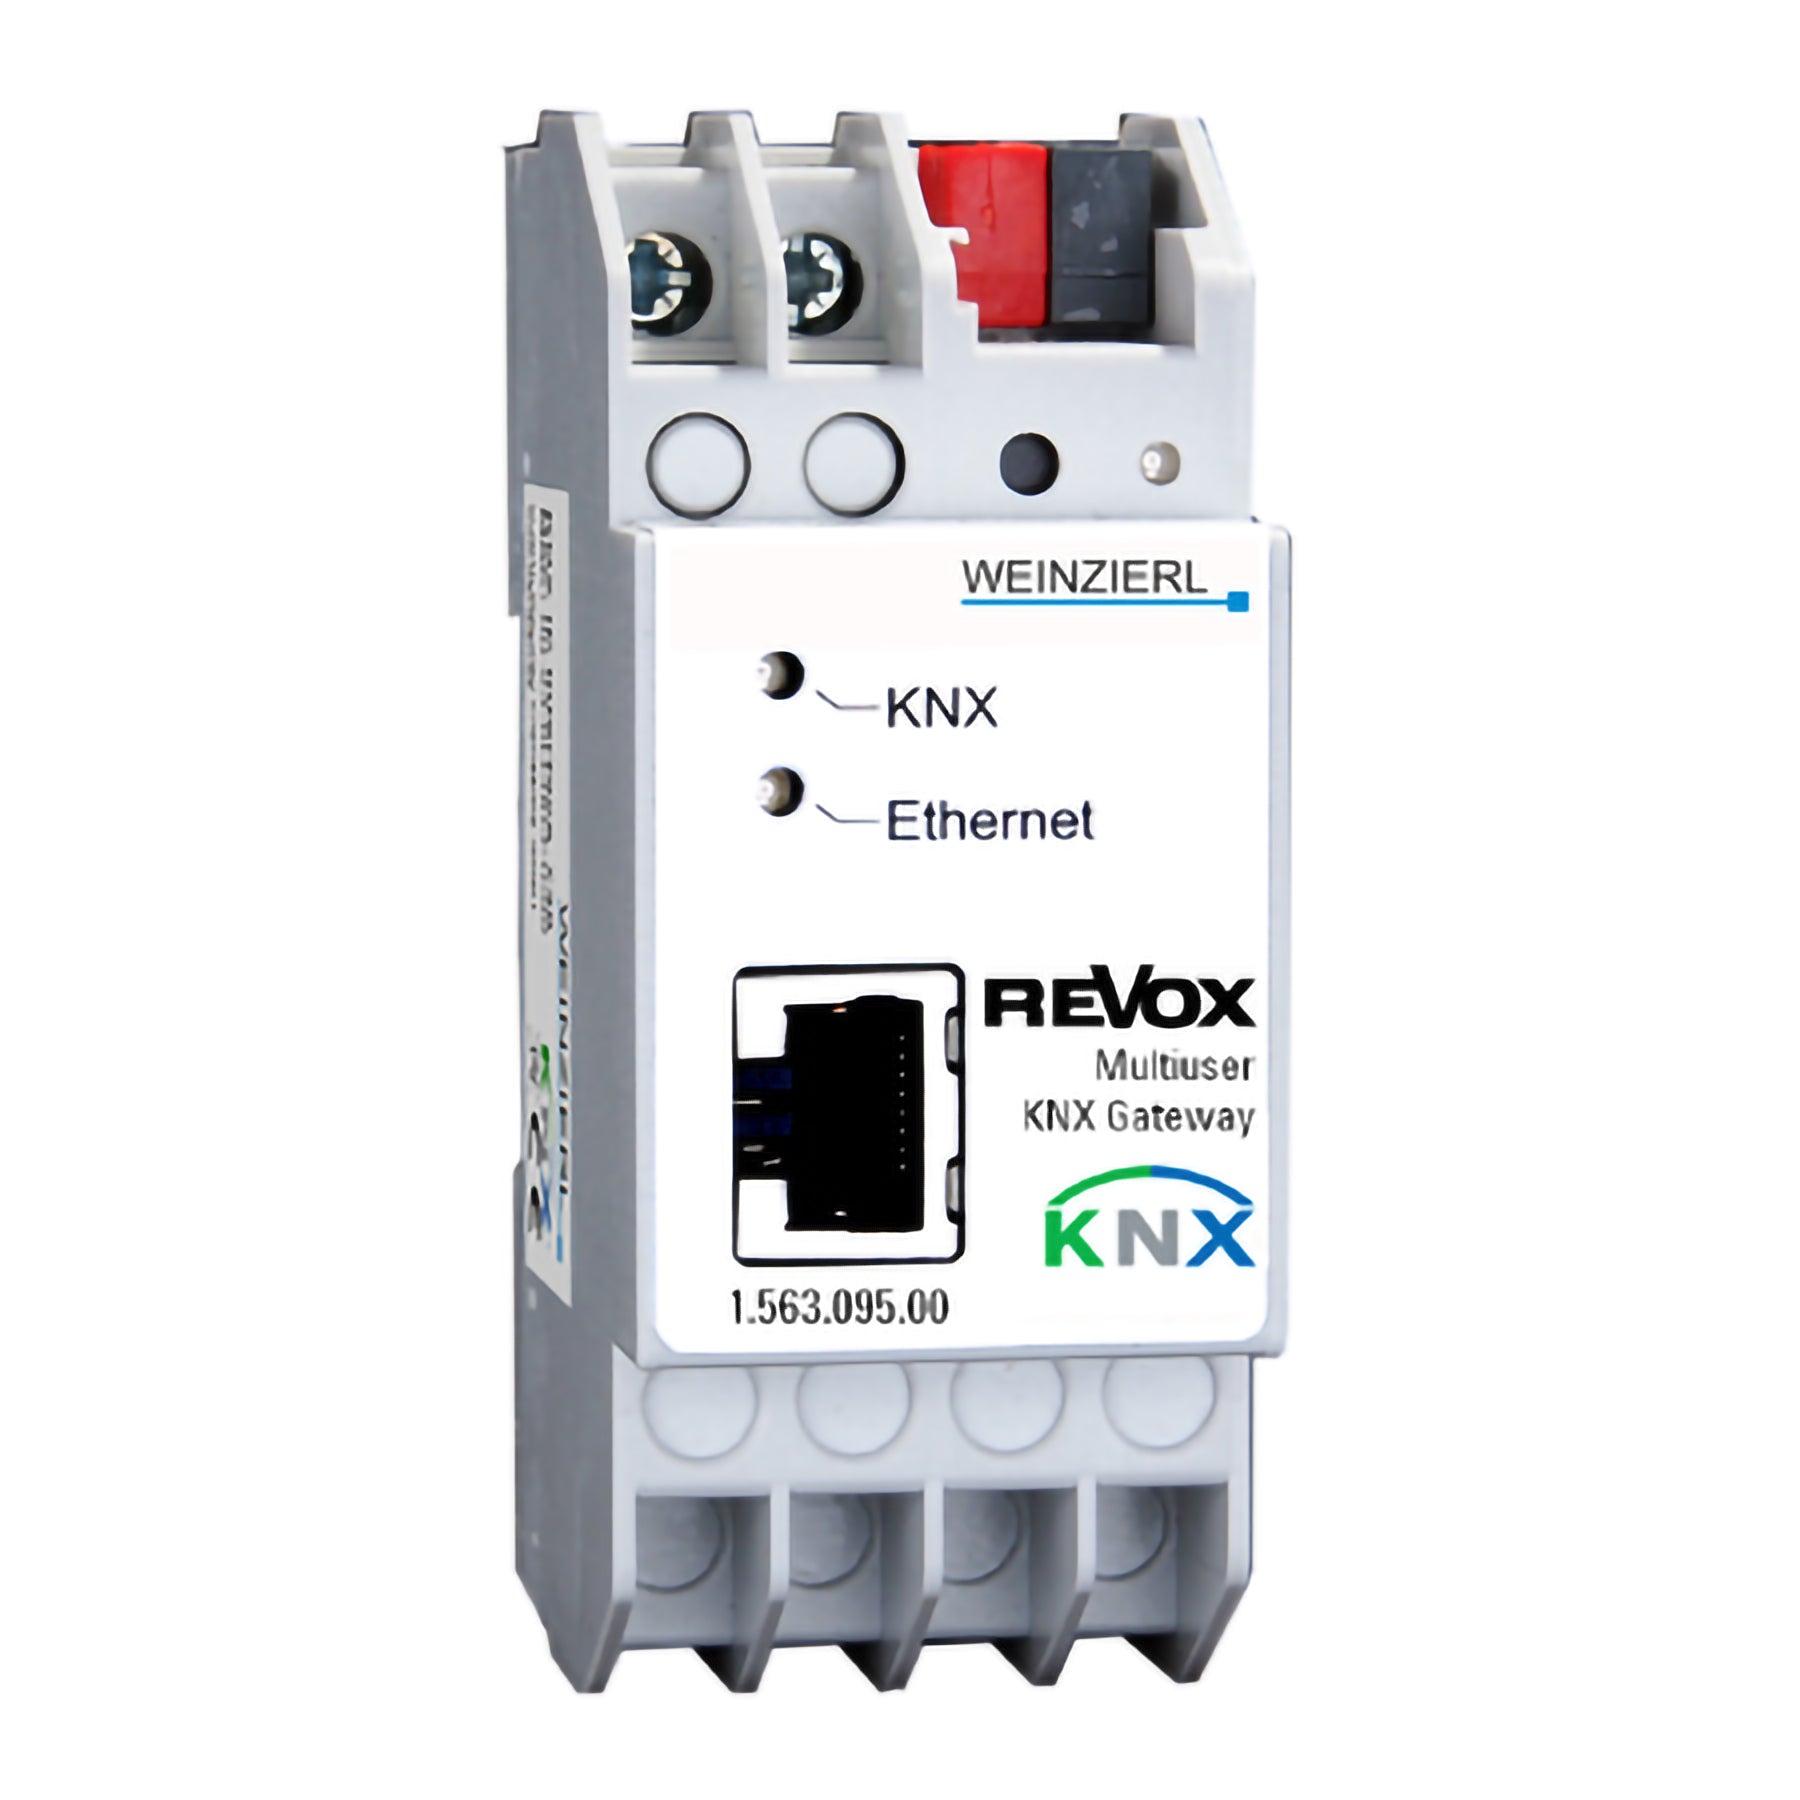 Revox Multiuser KNX Gateway